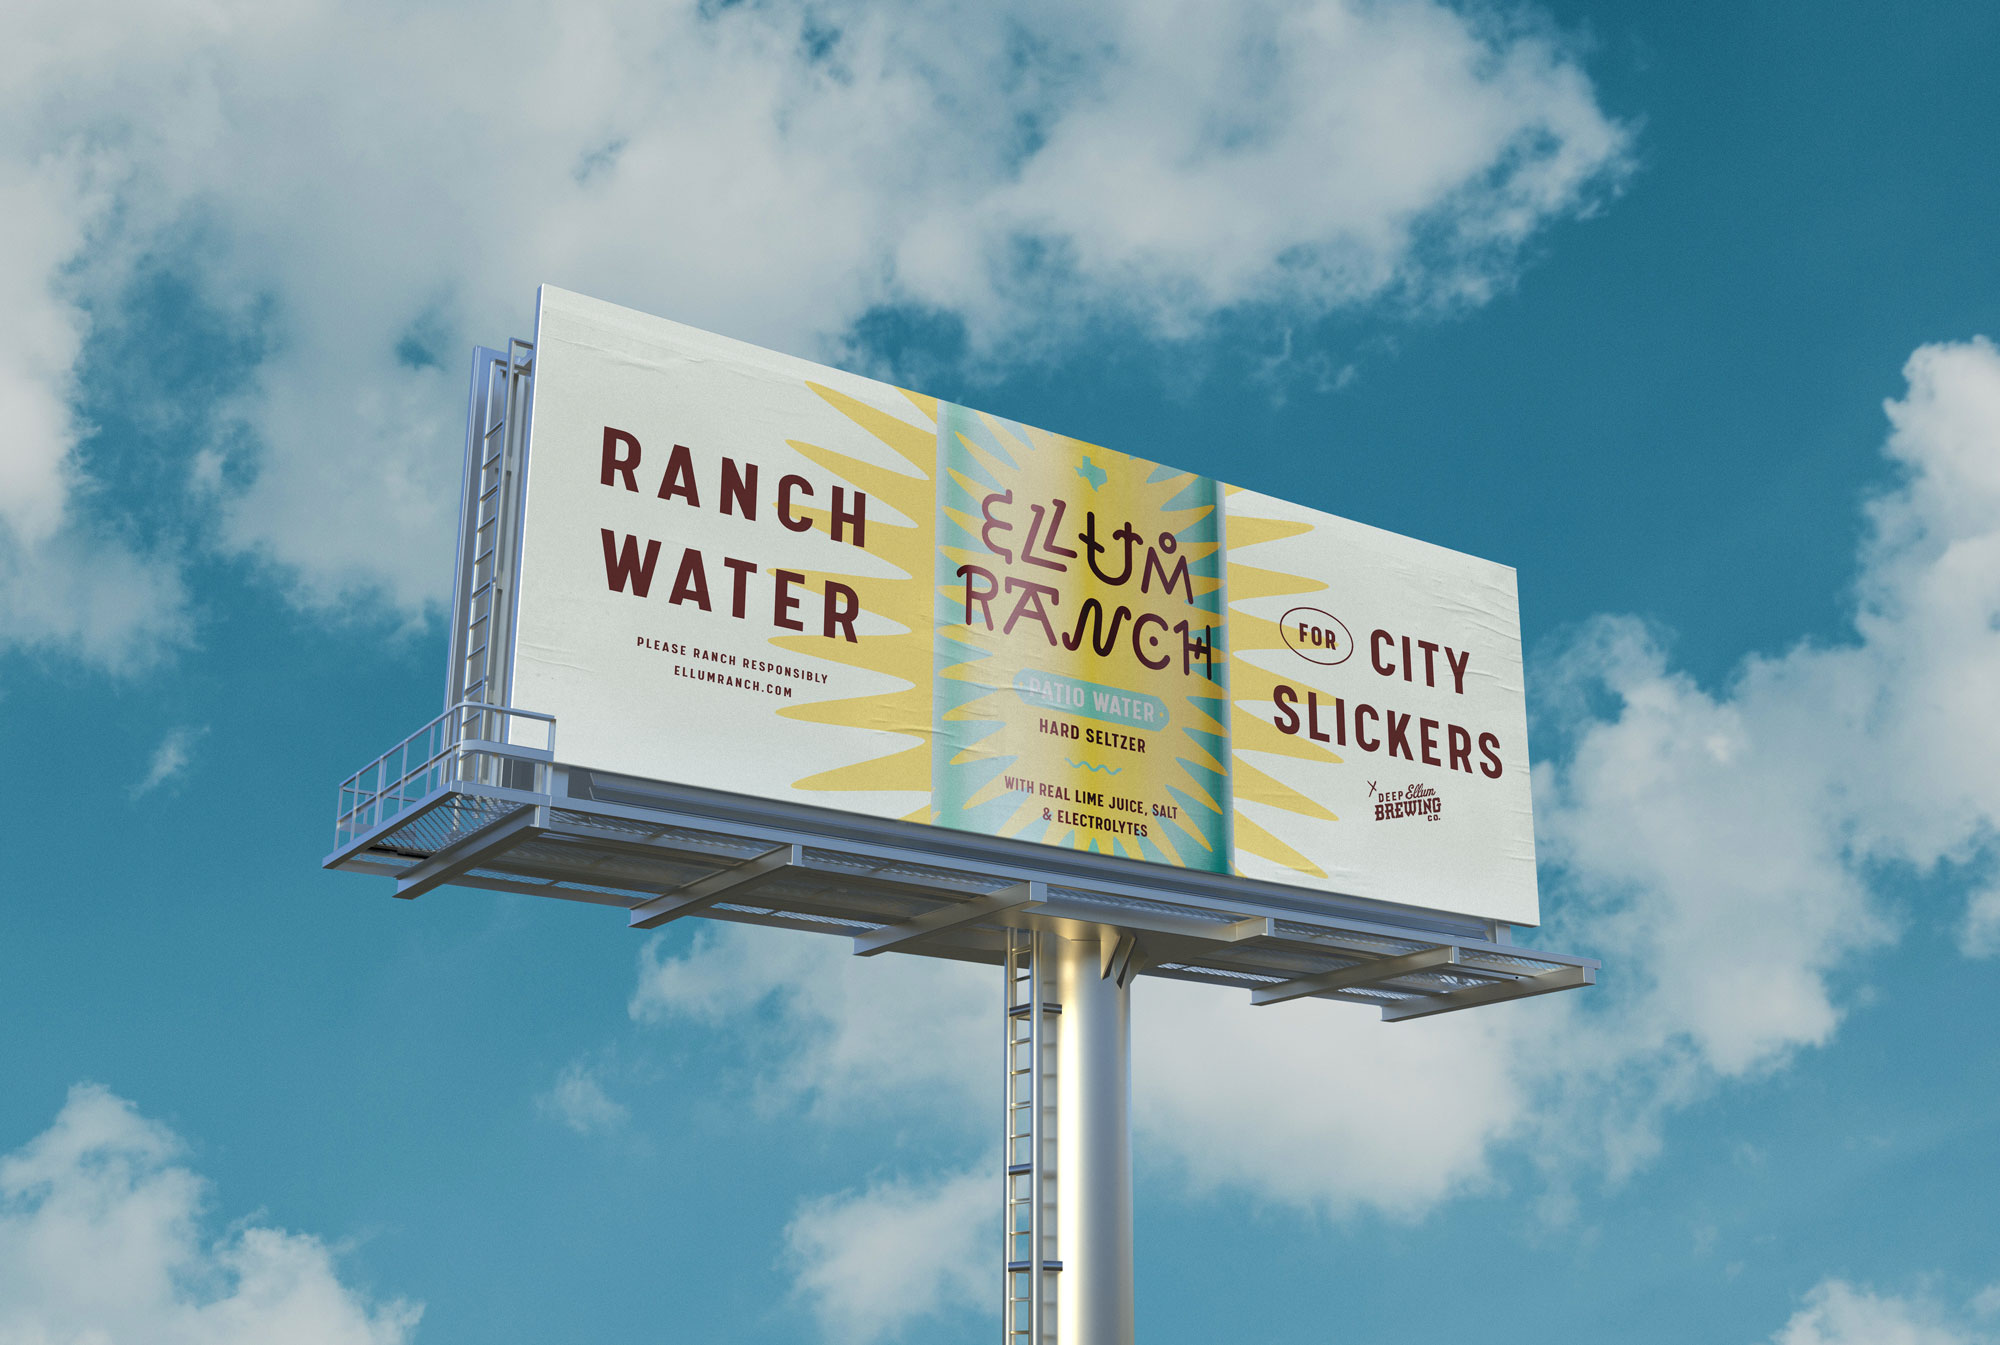 ellum-ranch-billboard